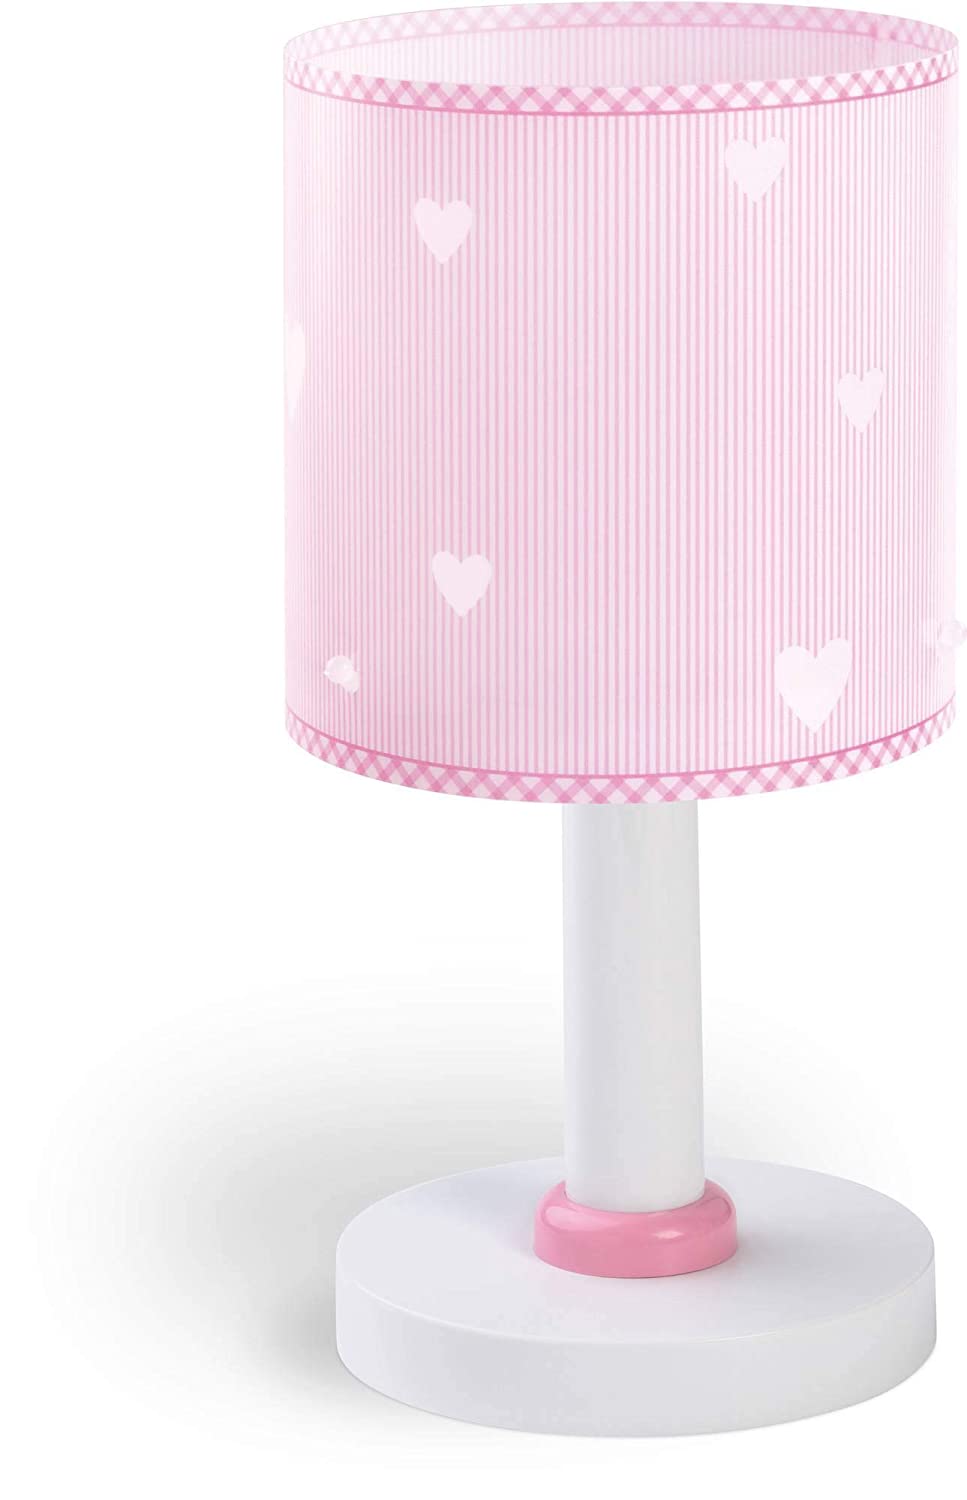 Dalber Sweet Dreams 62011S Table Lamp, Plastic, Pink, 15 x 15 x 29 cm